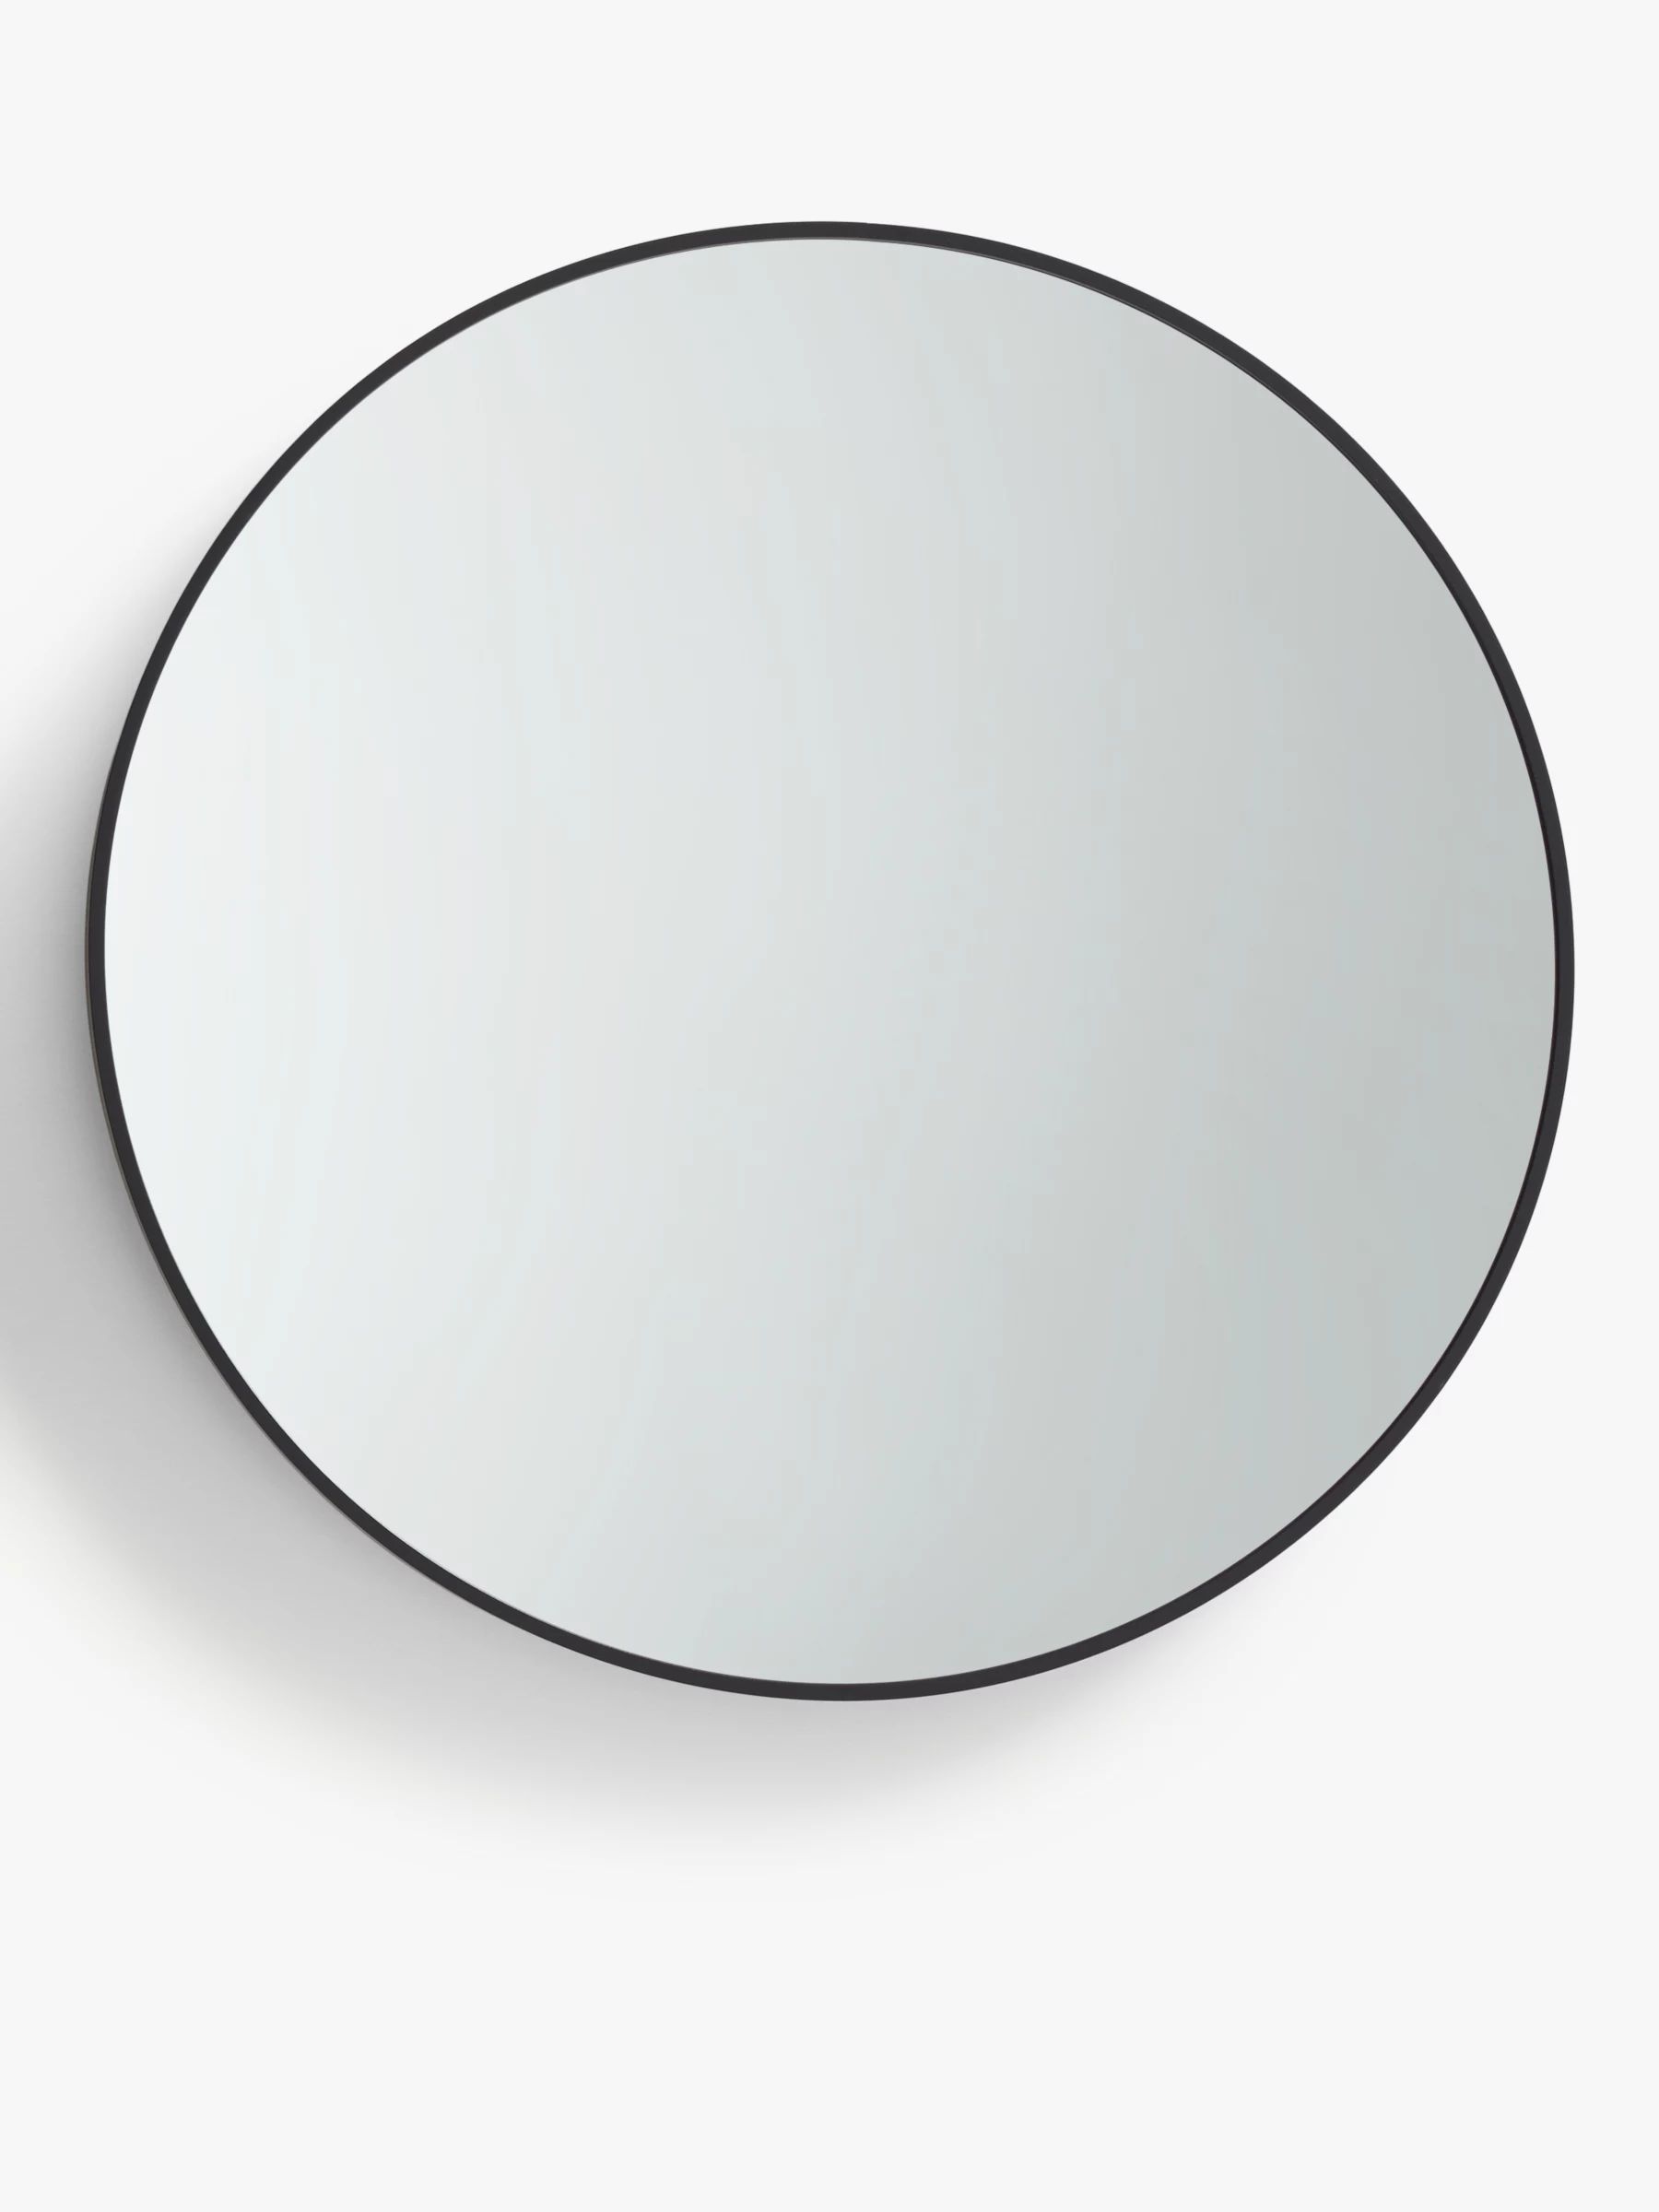 ANYDAY John Lewis & Partners Thin Aluminium Frame Round Wall Mirror, 65cm, Black | John Lewis (UK)